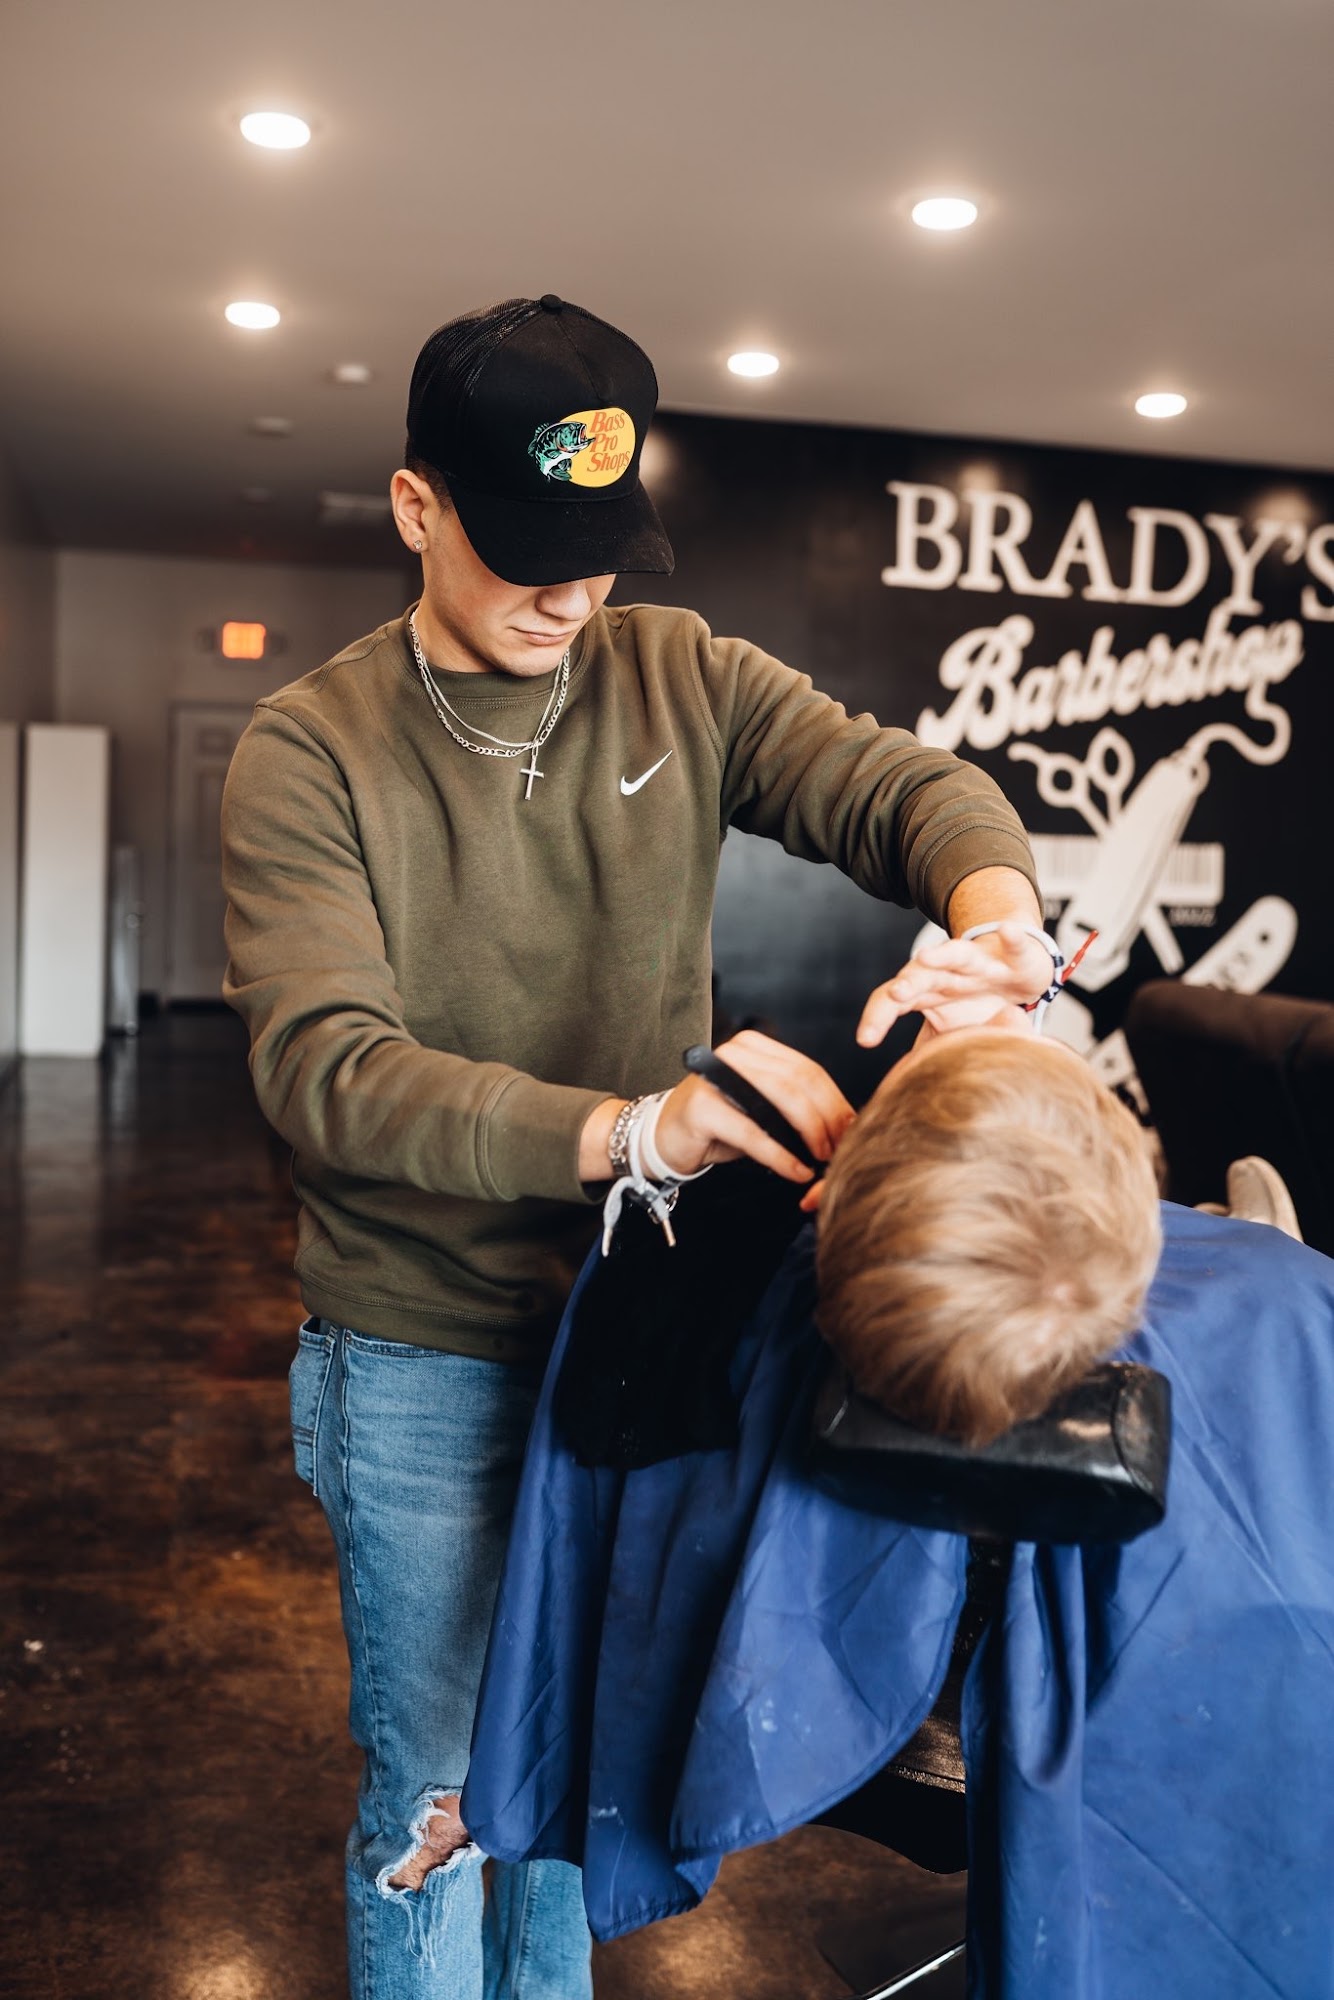 Brady’s Barbershop ‘Blades & Fades’ 420 TN-52, Lafayette Tennessee 37083